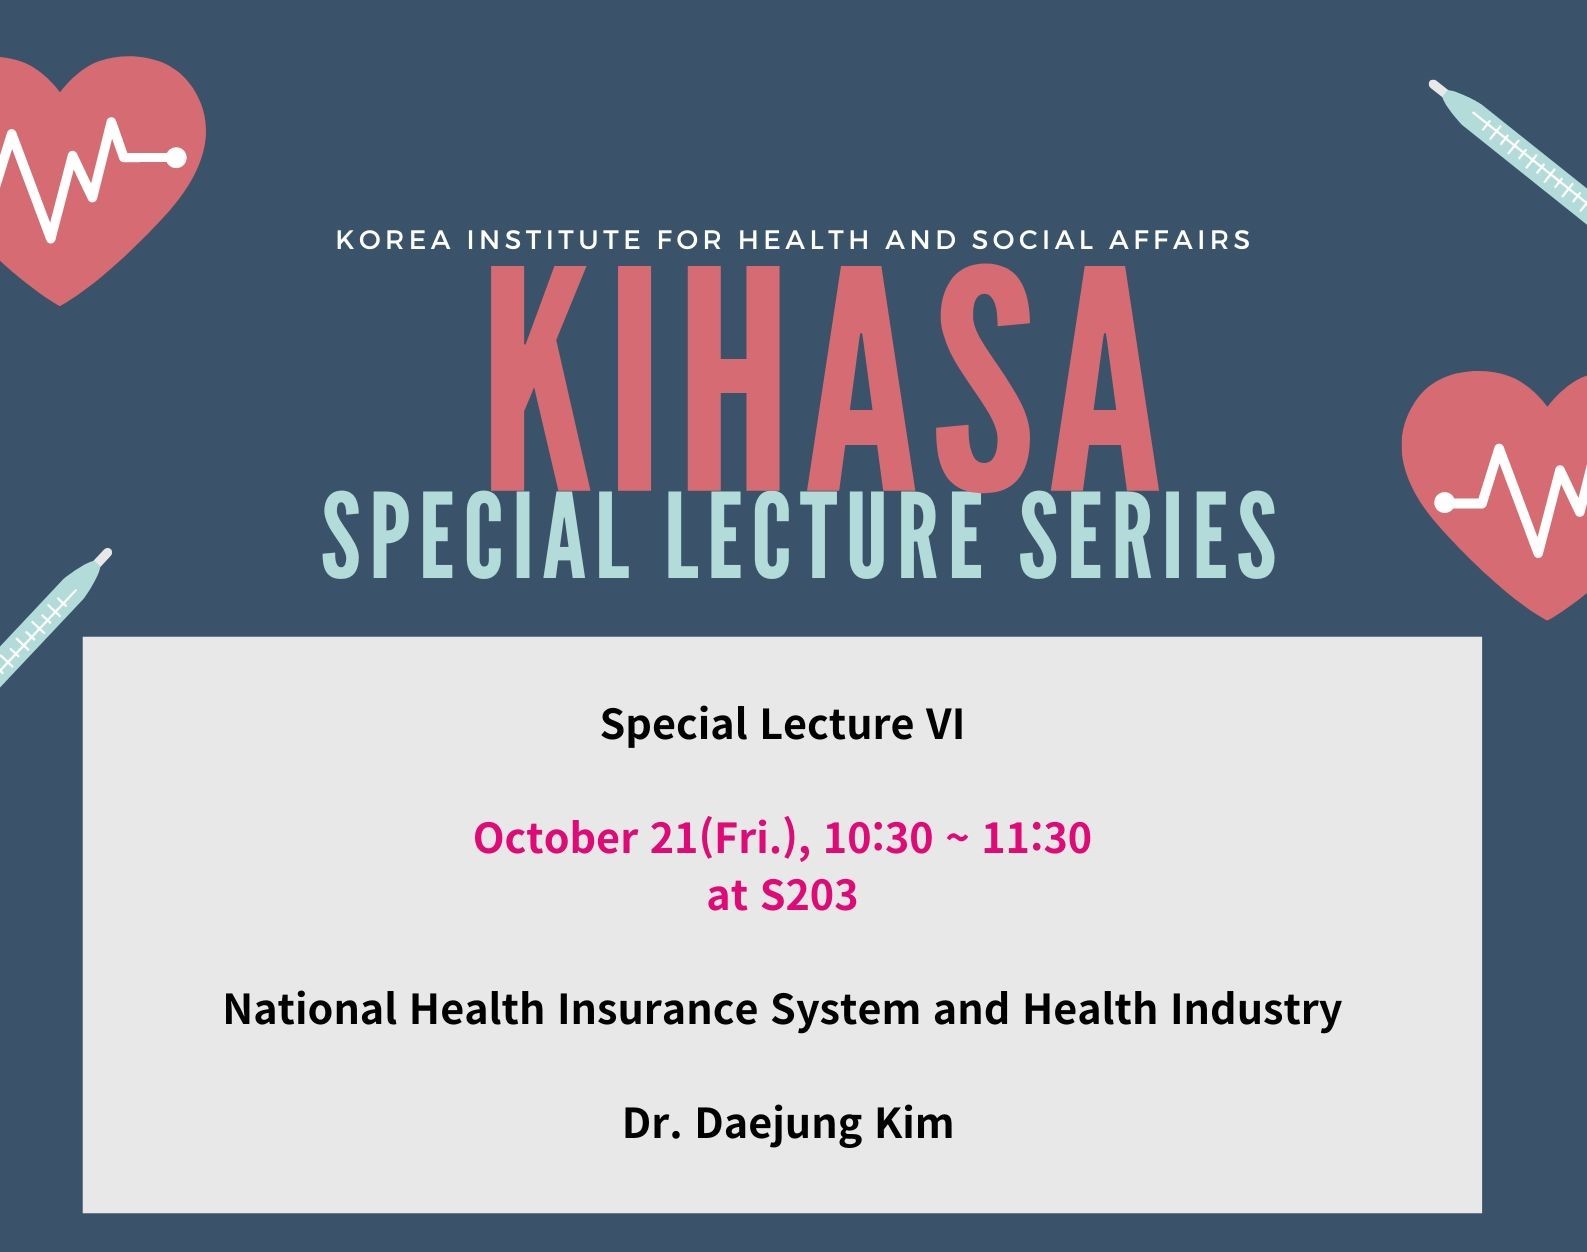 KIHASA Special Lecture Series VI (한국보건사회연구원 특강 시리즈)